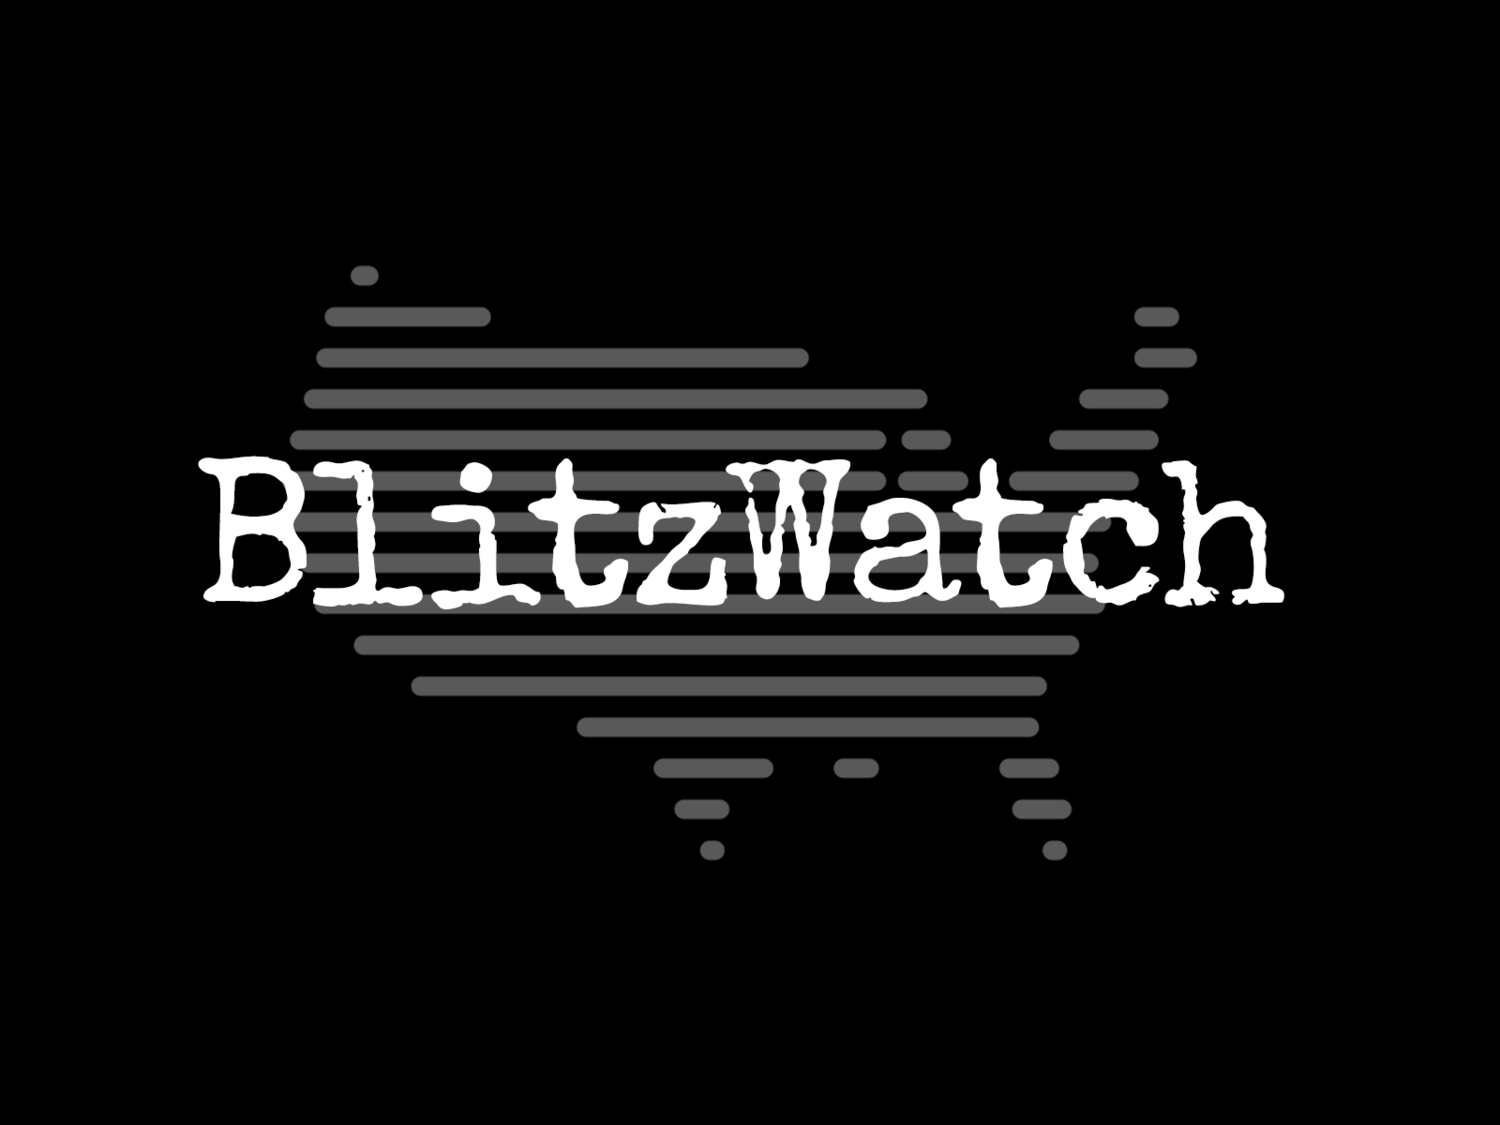 www.blitzwatch.org